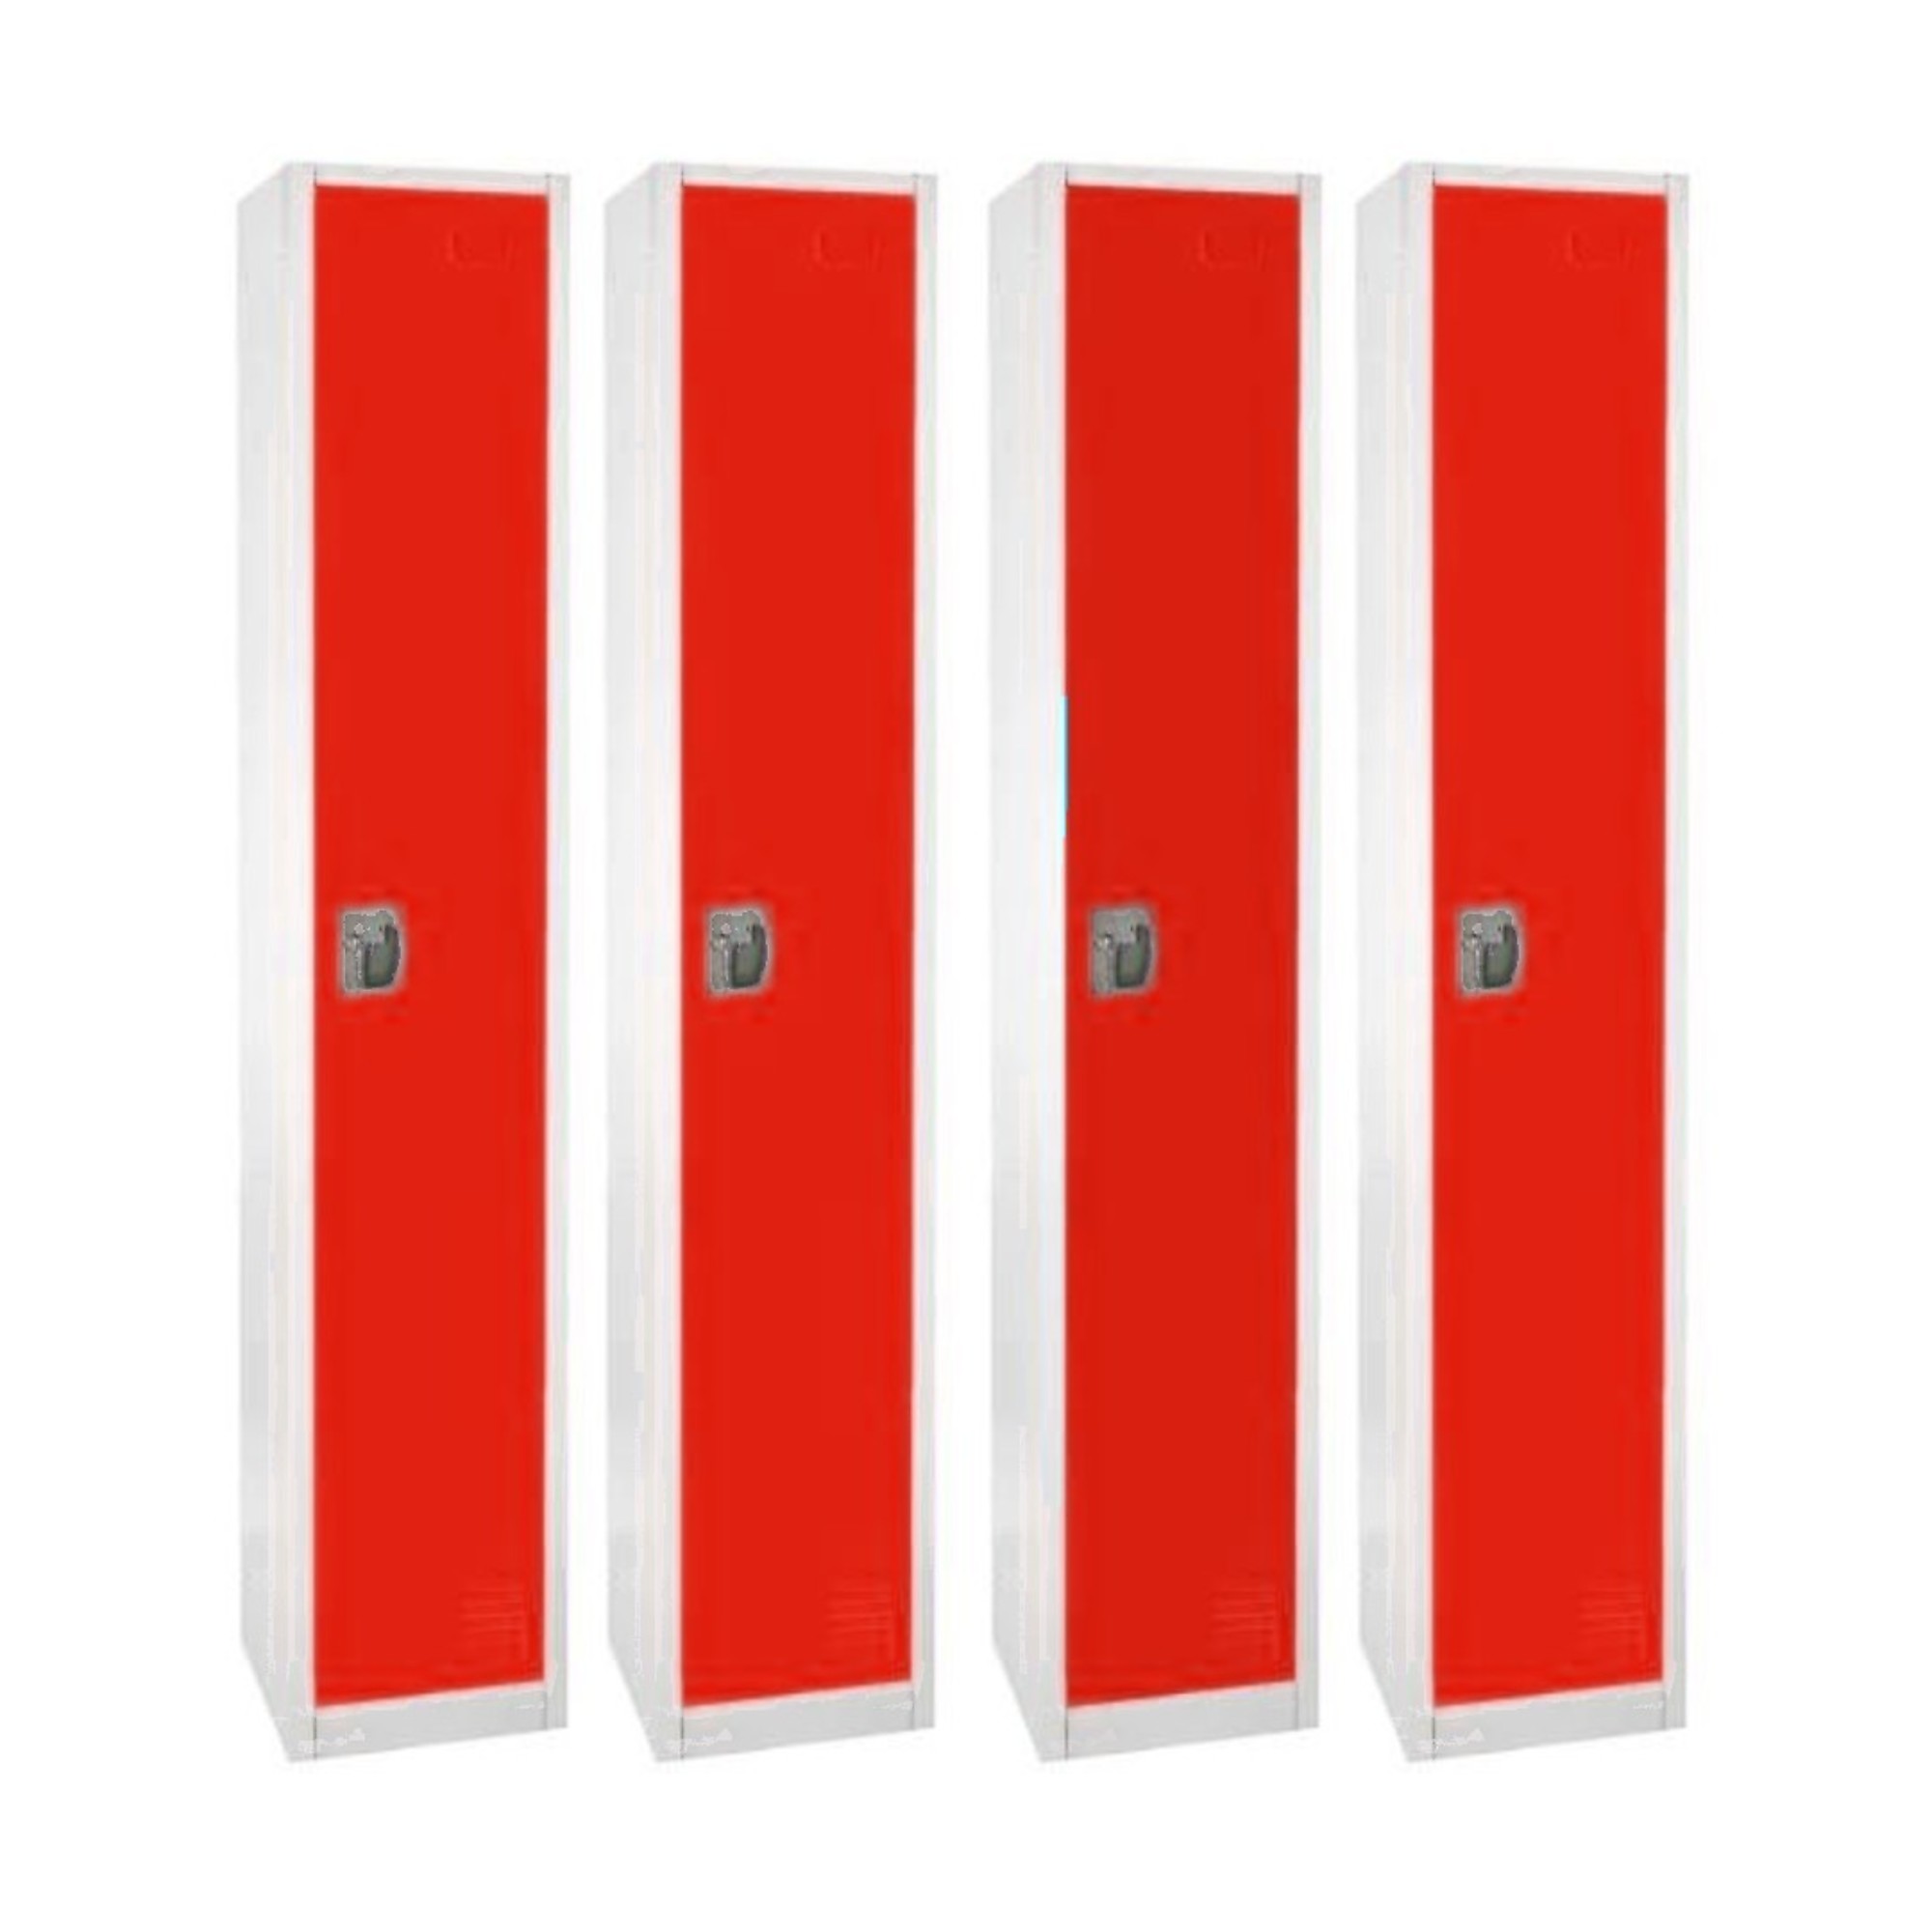 Alpine, 72Inch H 1-Tier Steel Storage Locker, Red, 4-Pack, Height 72 in, Width 12 in, Color Red, Model ADI629-201-RED-4PK